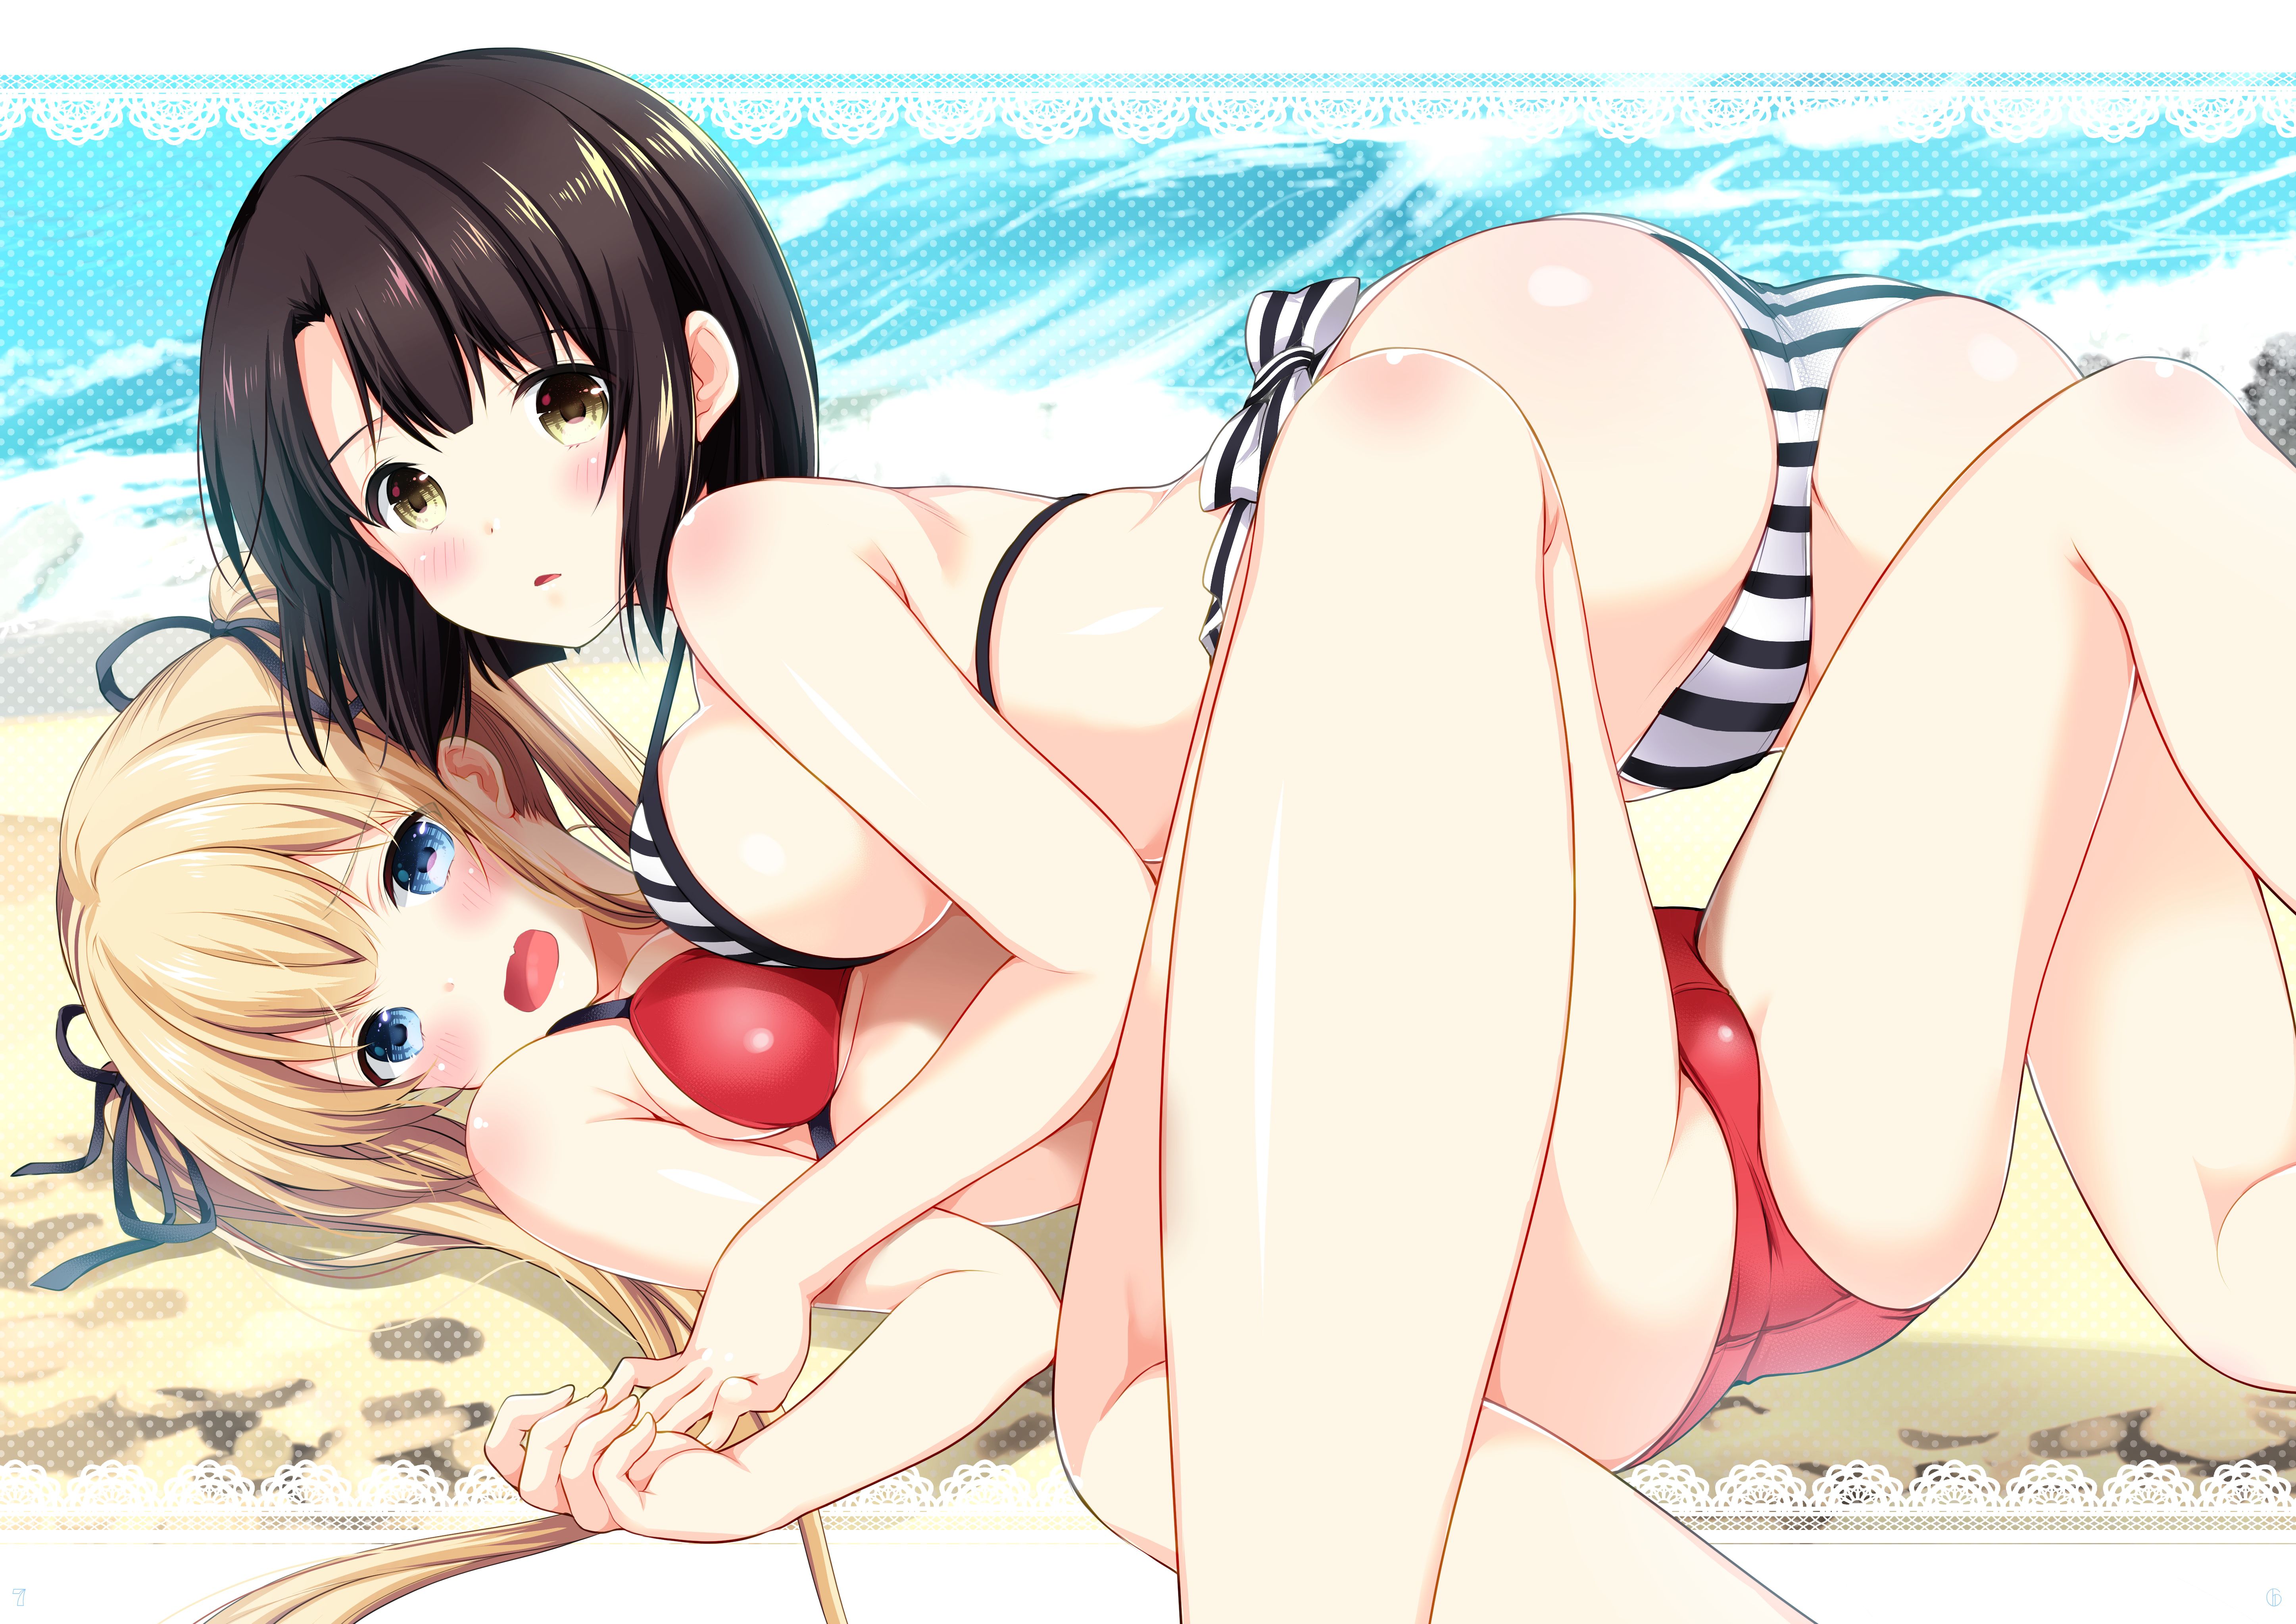 Erotic anime summary erotic images of beautiful girls wearing striped bikinis [50 photos] 25